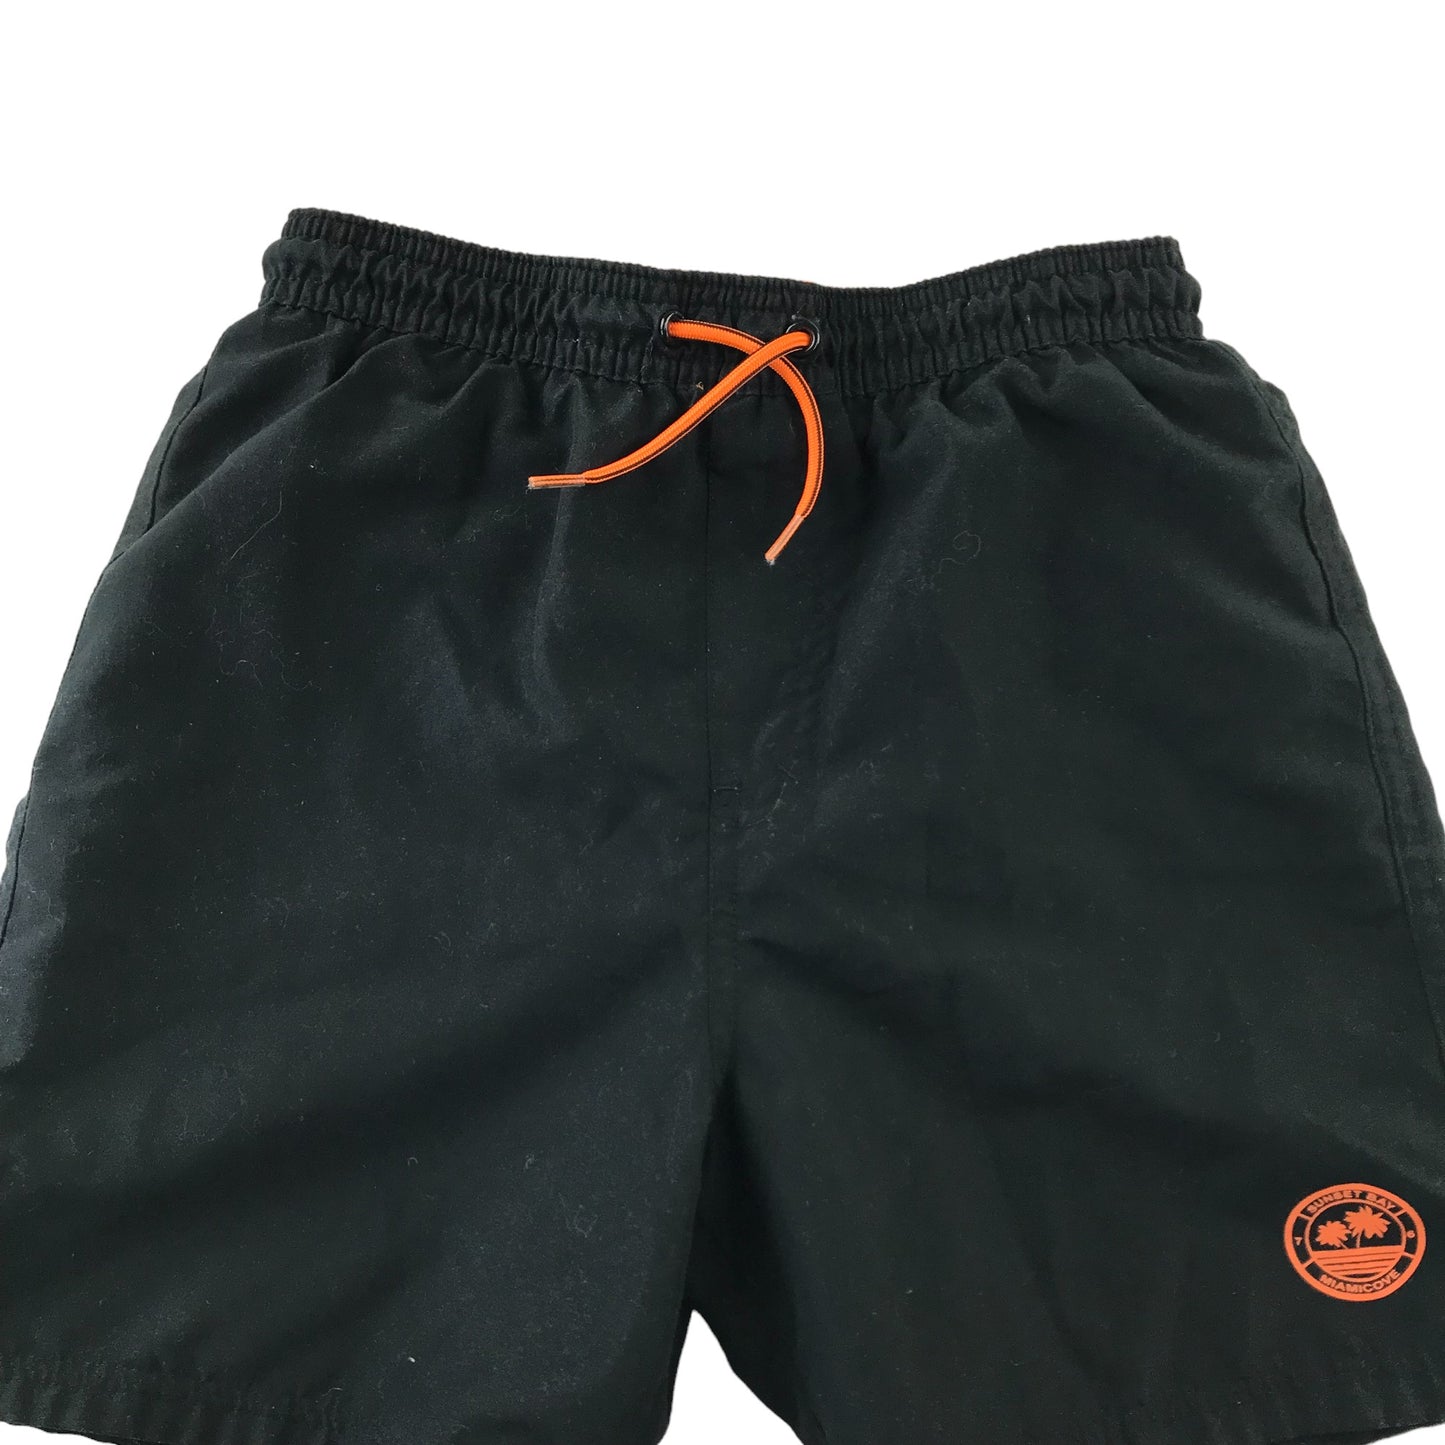 F&F Swim Trunks Age 9 Black with Orange Draw Strings and Logo Shorts